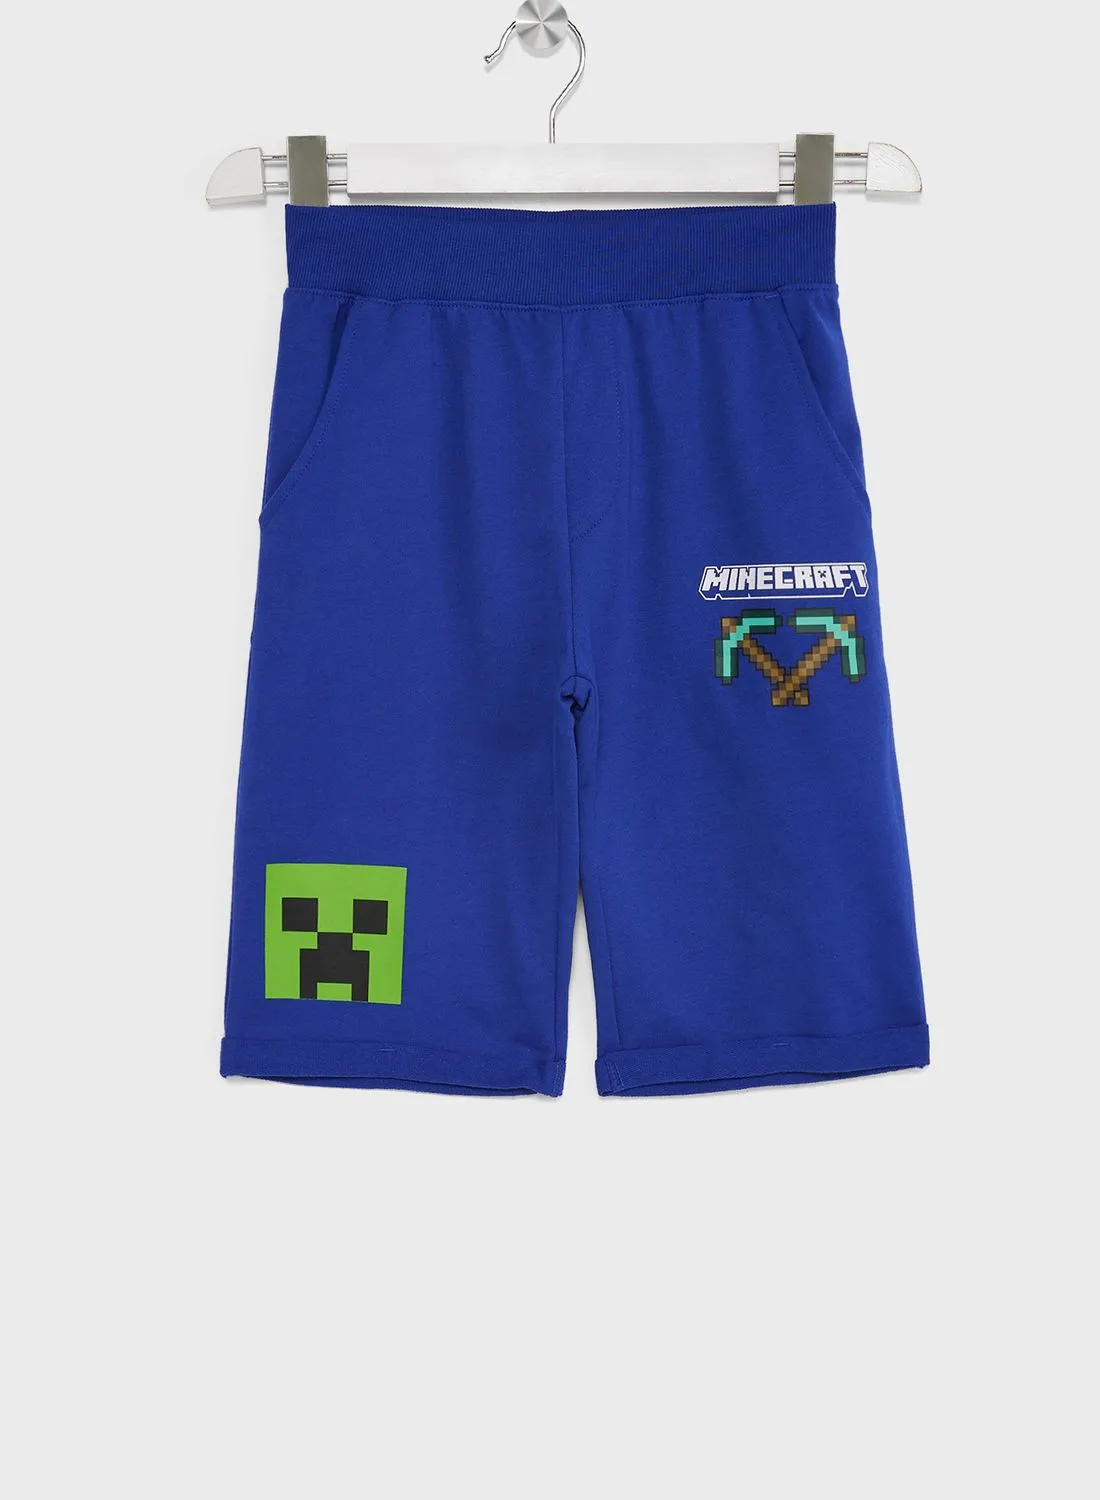 MINECRAFT Minecraft Boys Printed Shorts